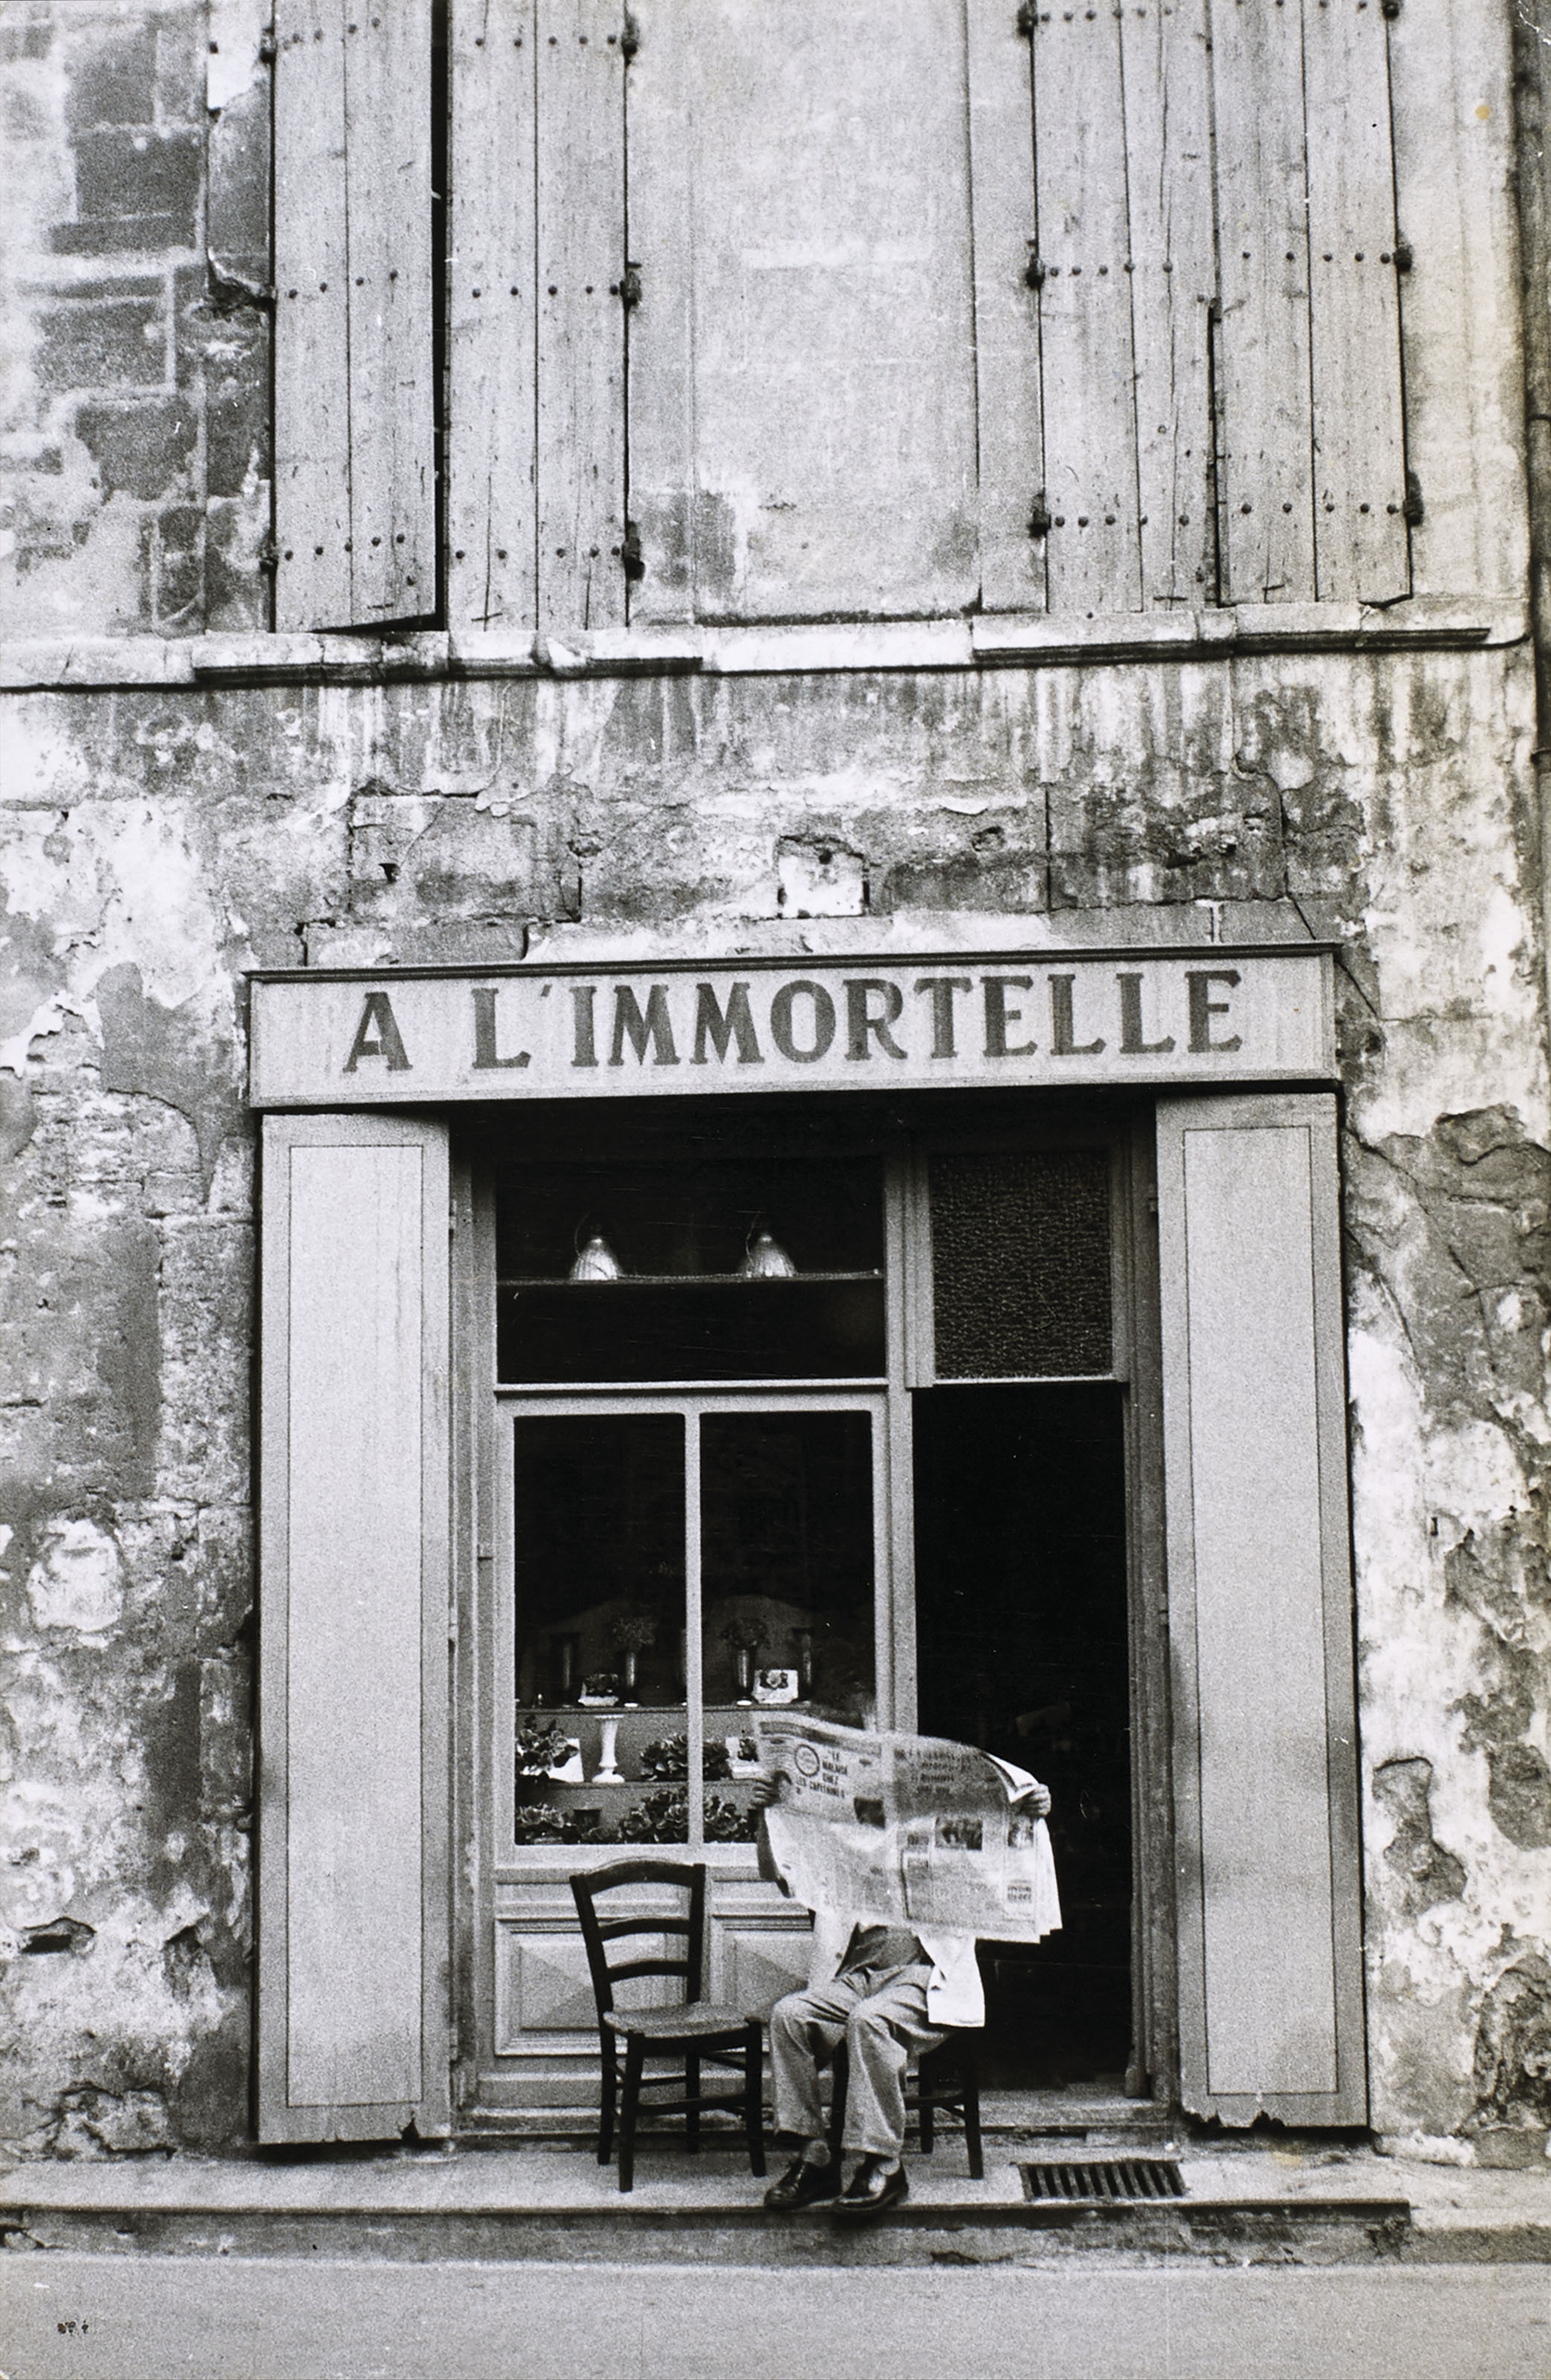 À l'immortelle, Arles, France